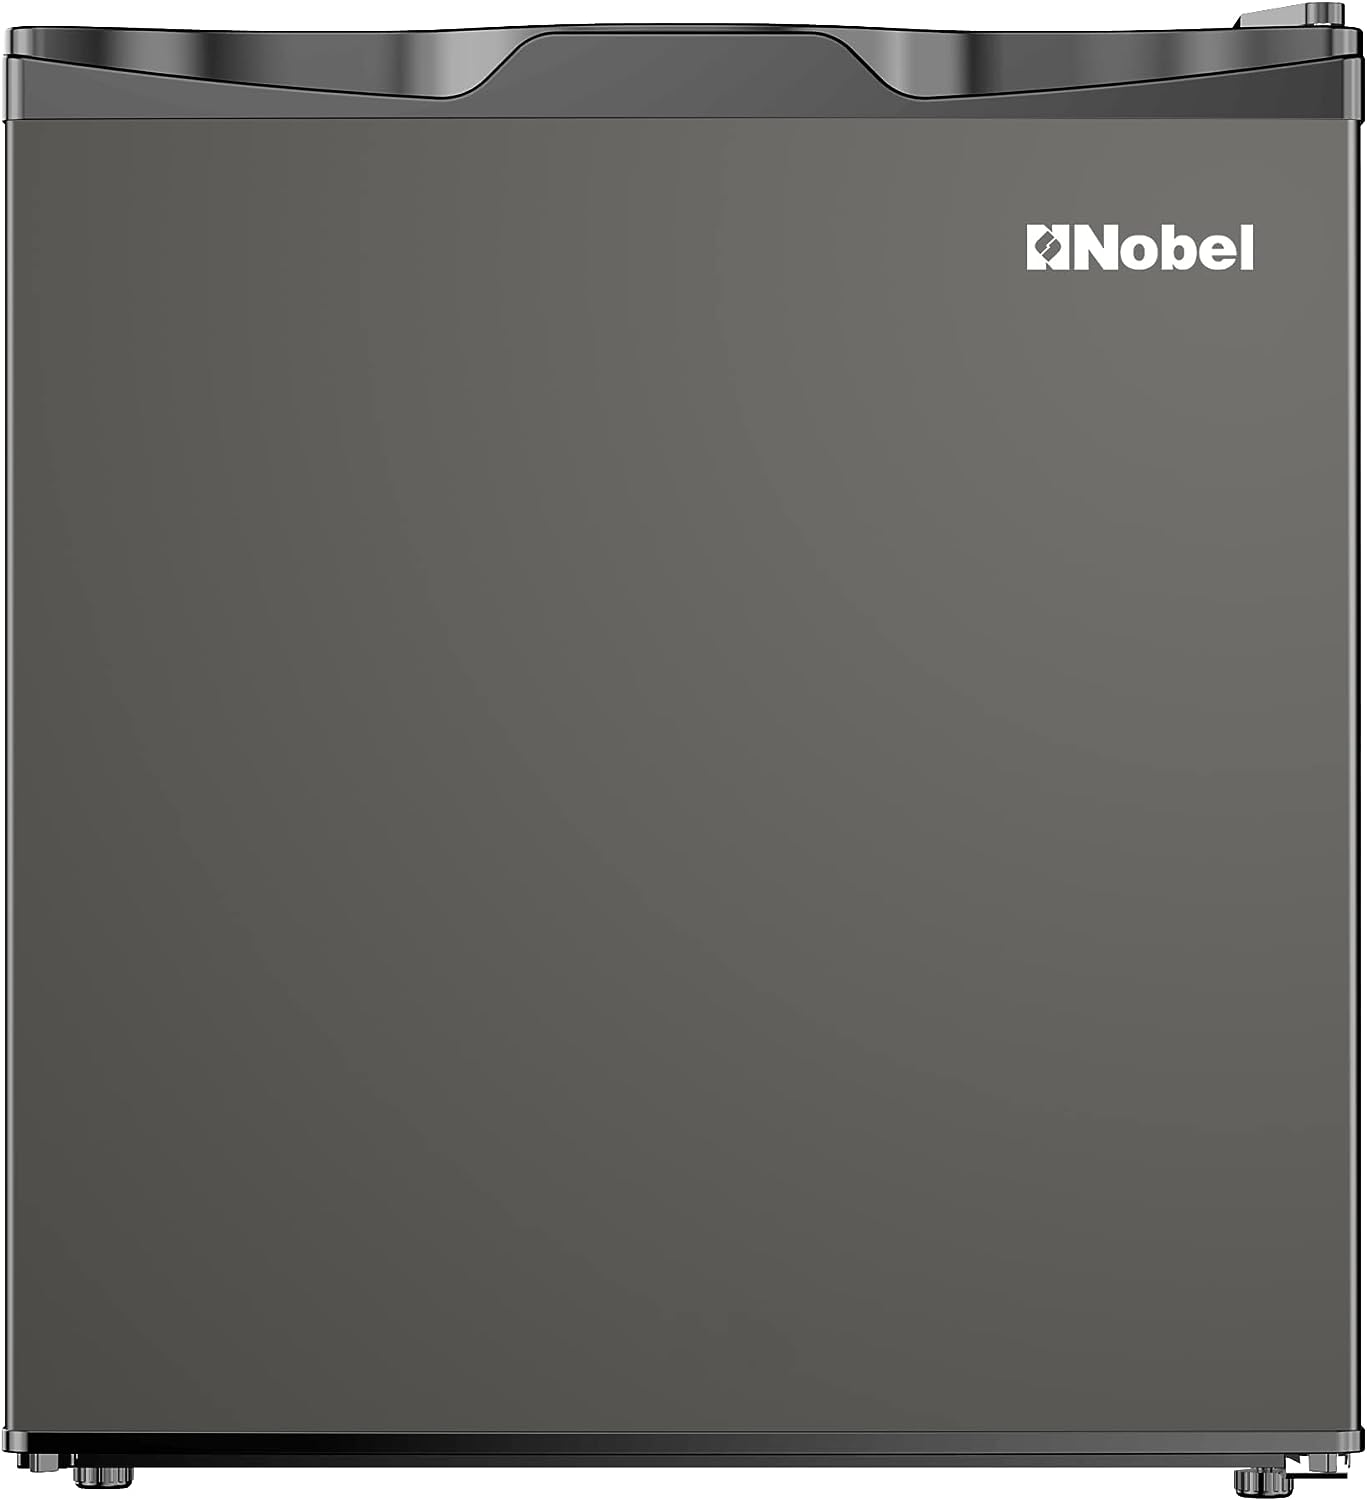 Nobel 47L Net Capacity Single Door Refrigerator Defrost, Mechanical Control, Shelf, Bottle Rack, Adjustable Foot , R600a Refrigerant, With Inner Lamp Silver NR65S